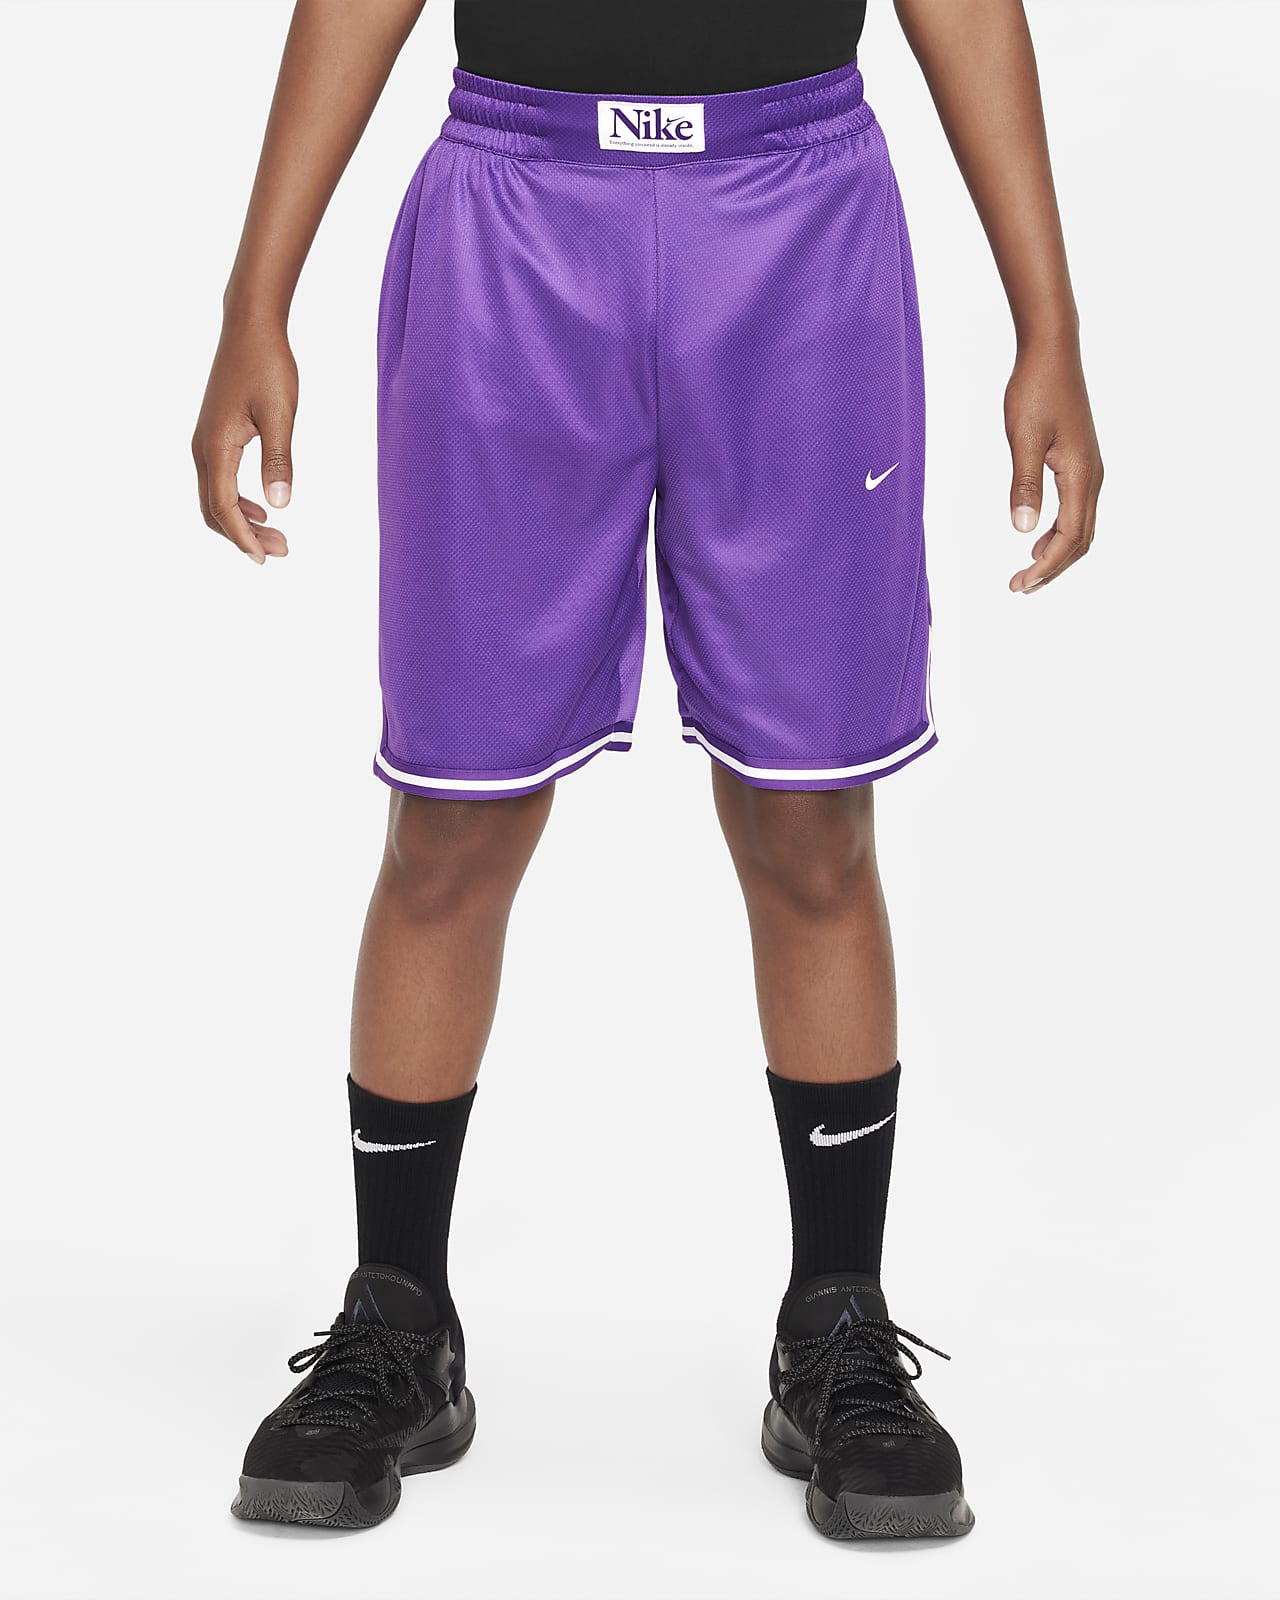 Nike Culture of Basketball DNA Older Kids' Reversible Basketball Shorts.  Nike IN